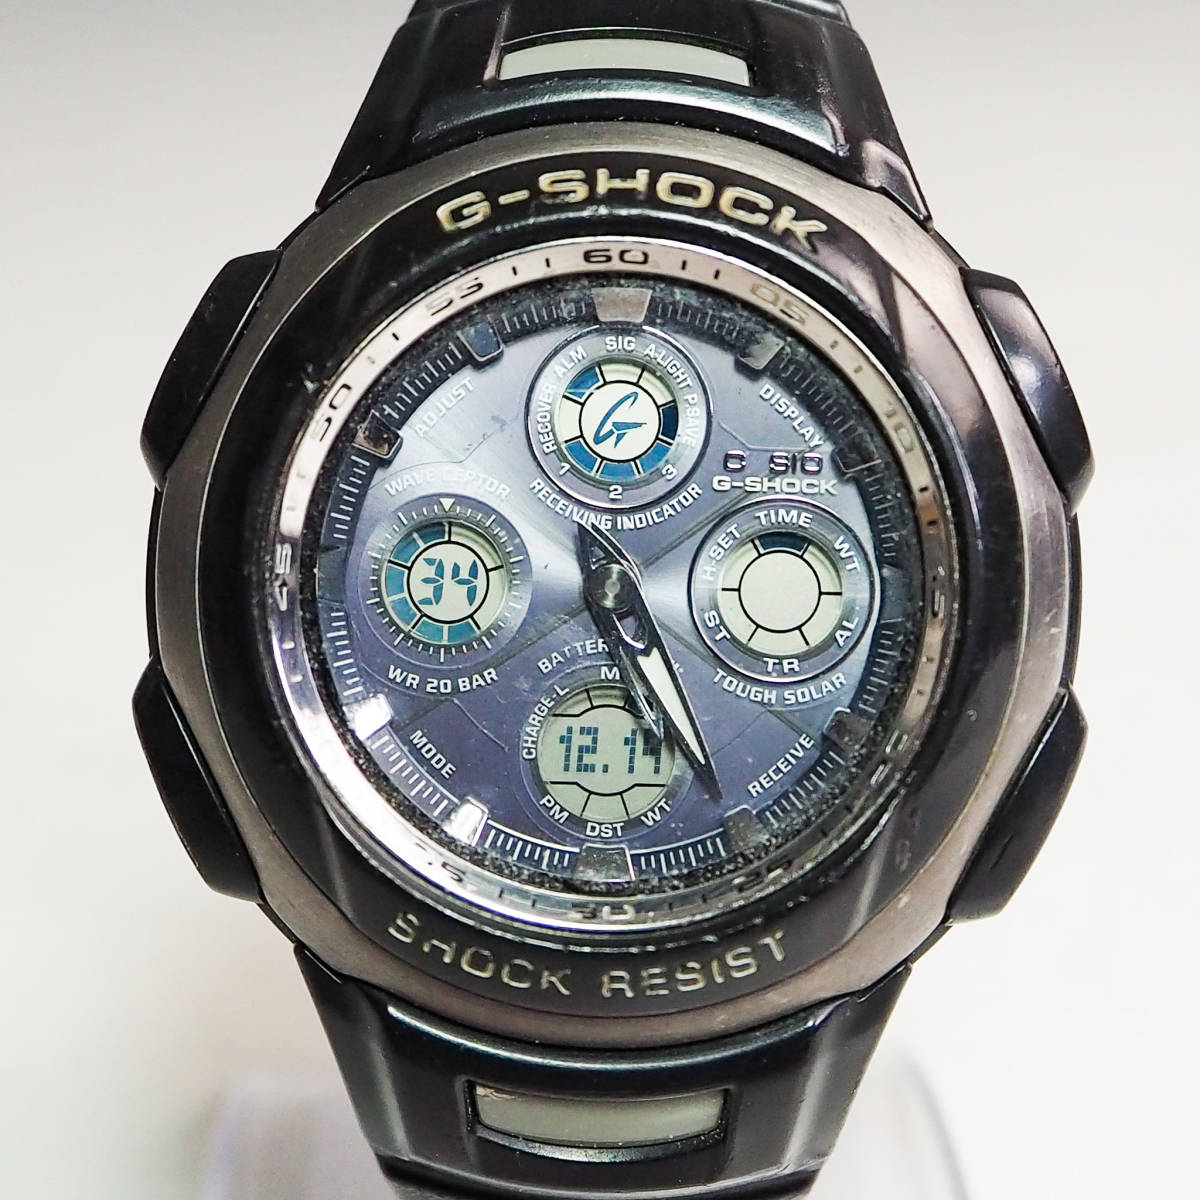 CASIO カシオ G-SHOCK Gショック The Gシリーズ 腕時計 GW-1300CJ-1AJF メンズ タフソーラー メタルコアバンド 電波 CO2786_画像1